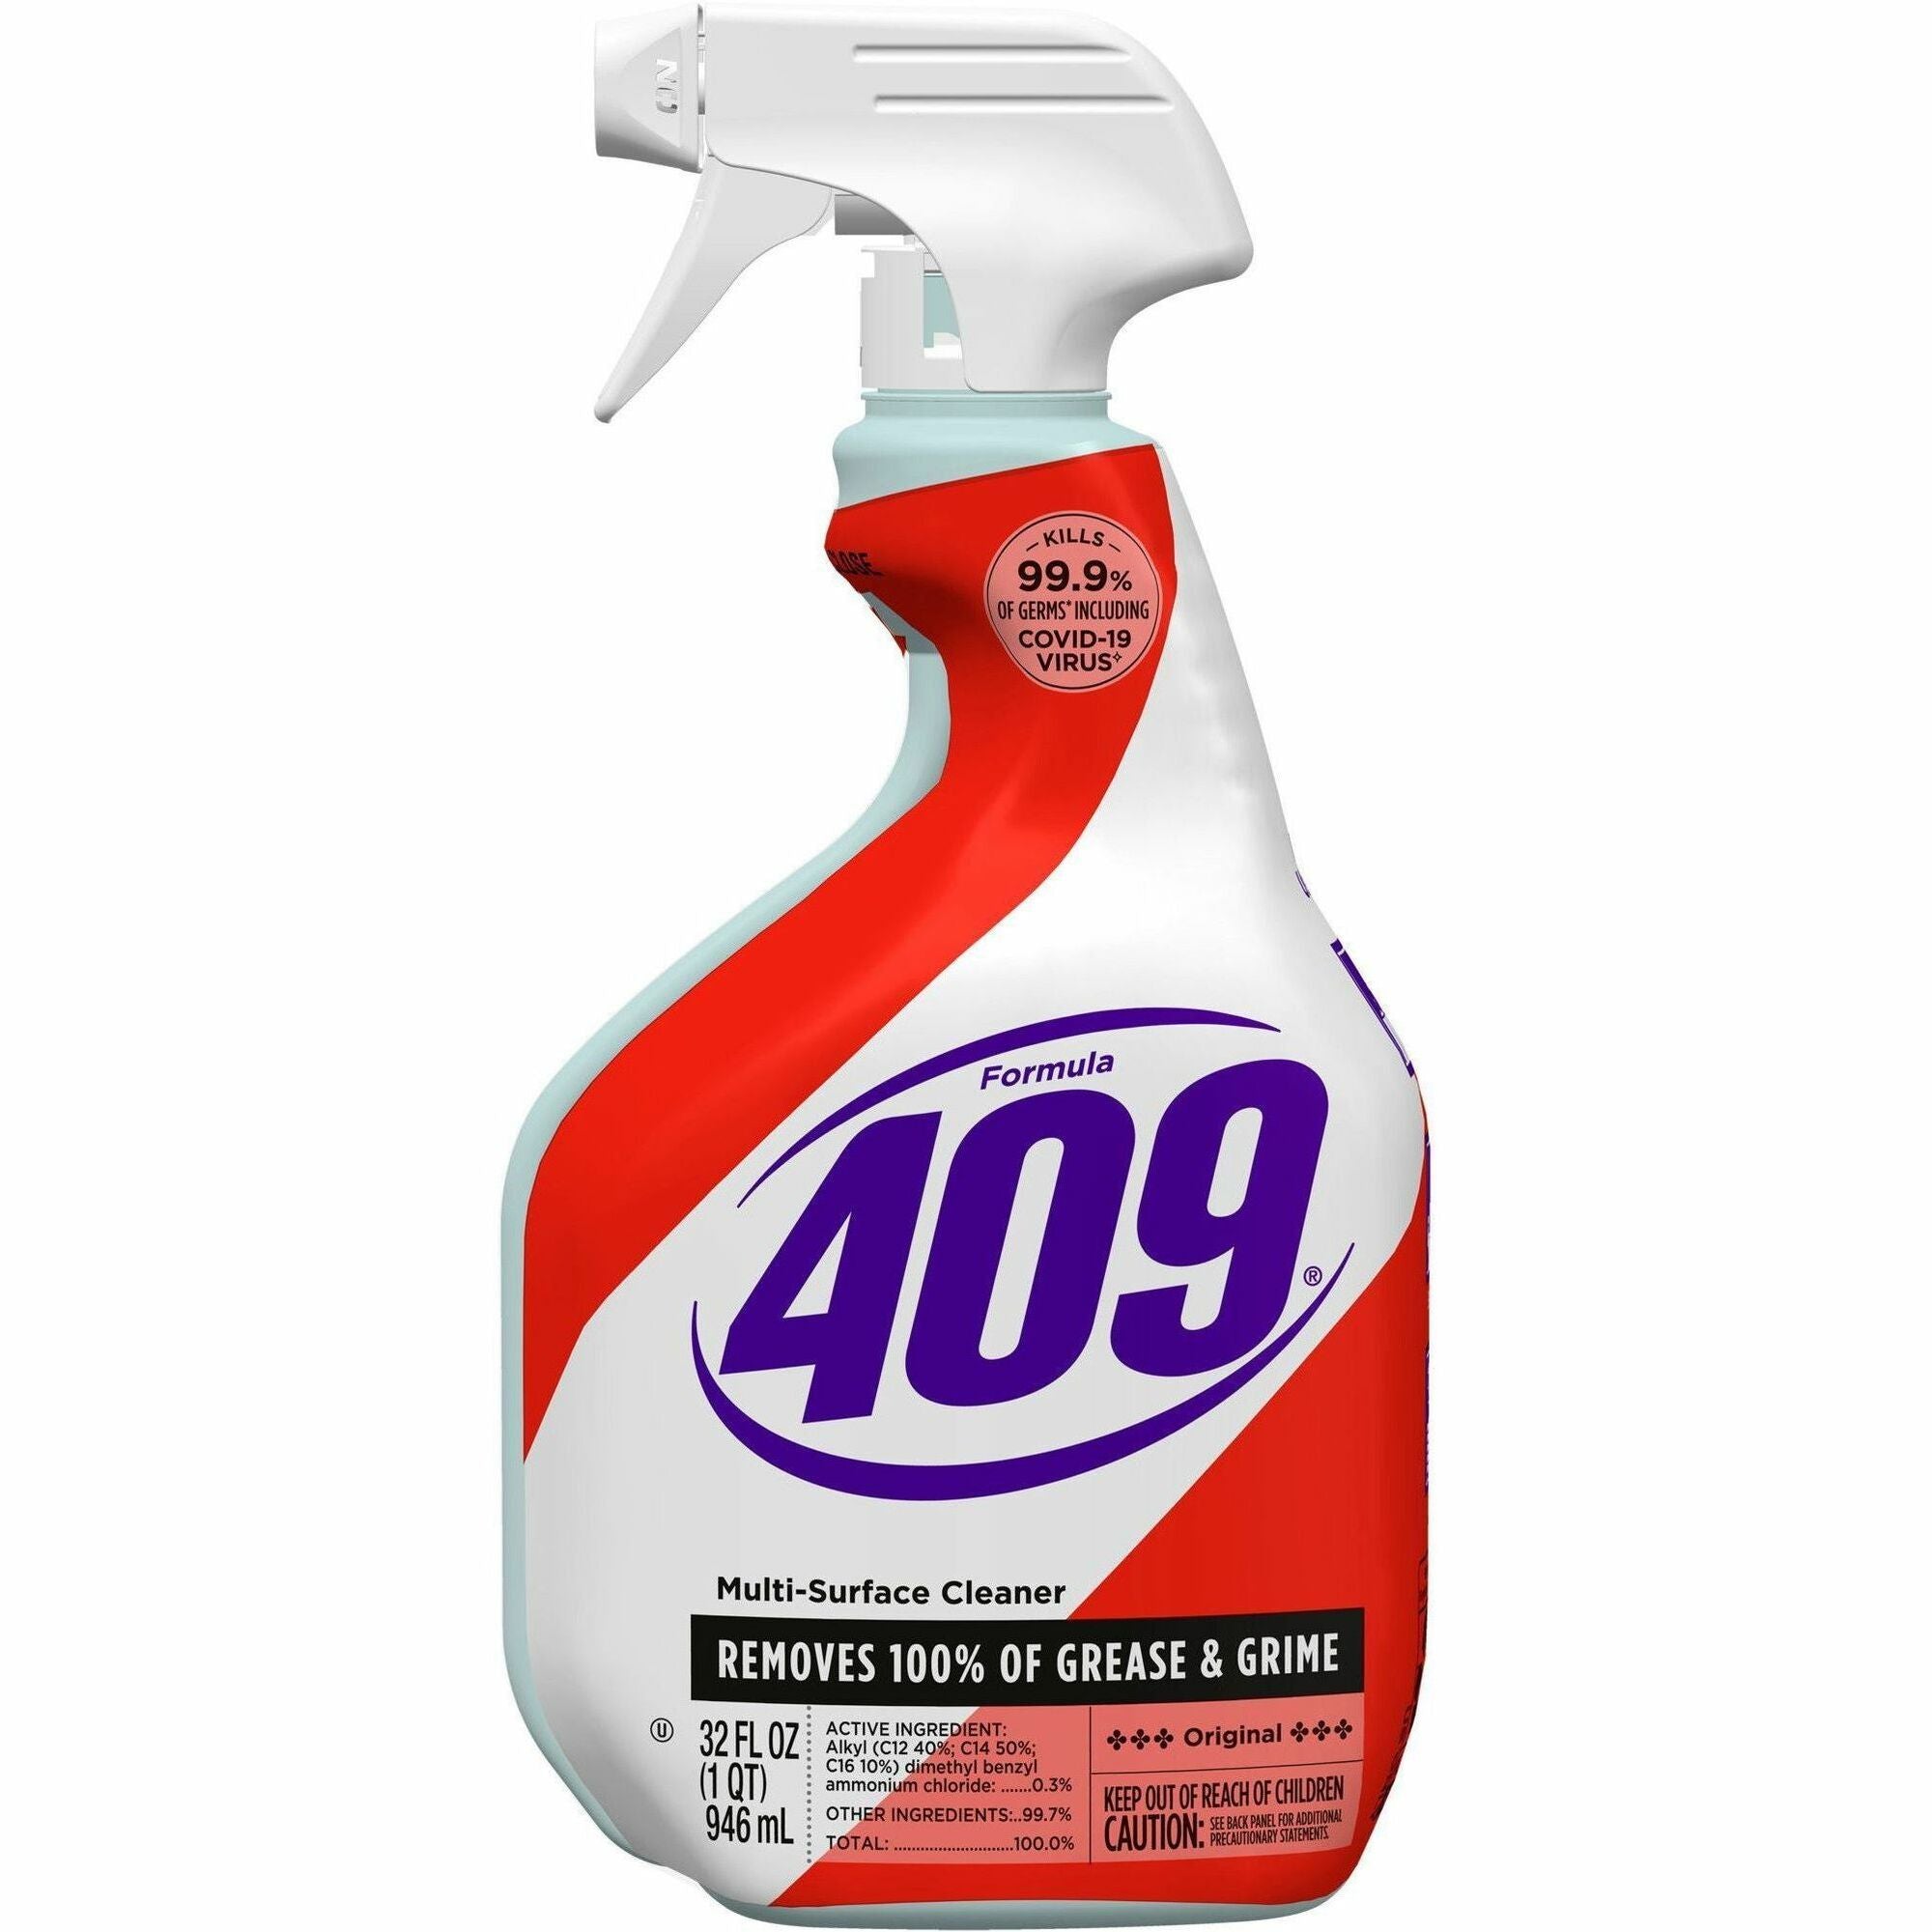 Formula 409 Multi-Surface Cleaner - 32 fl oz (1 quart) - Original Scent - 1 Each - Anti-bacterial, Deodorize, Disinfectant - White, Red - 1